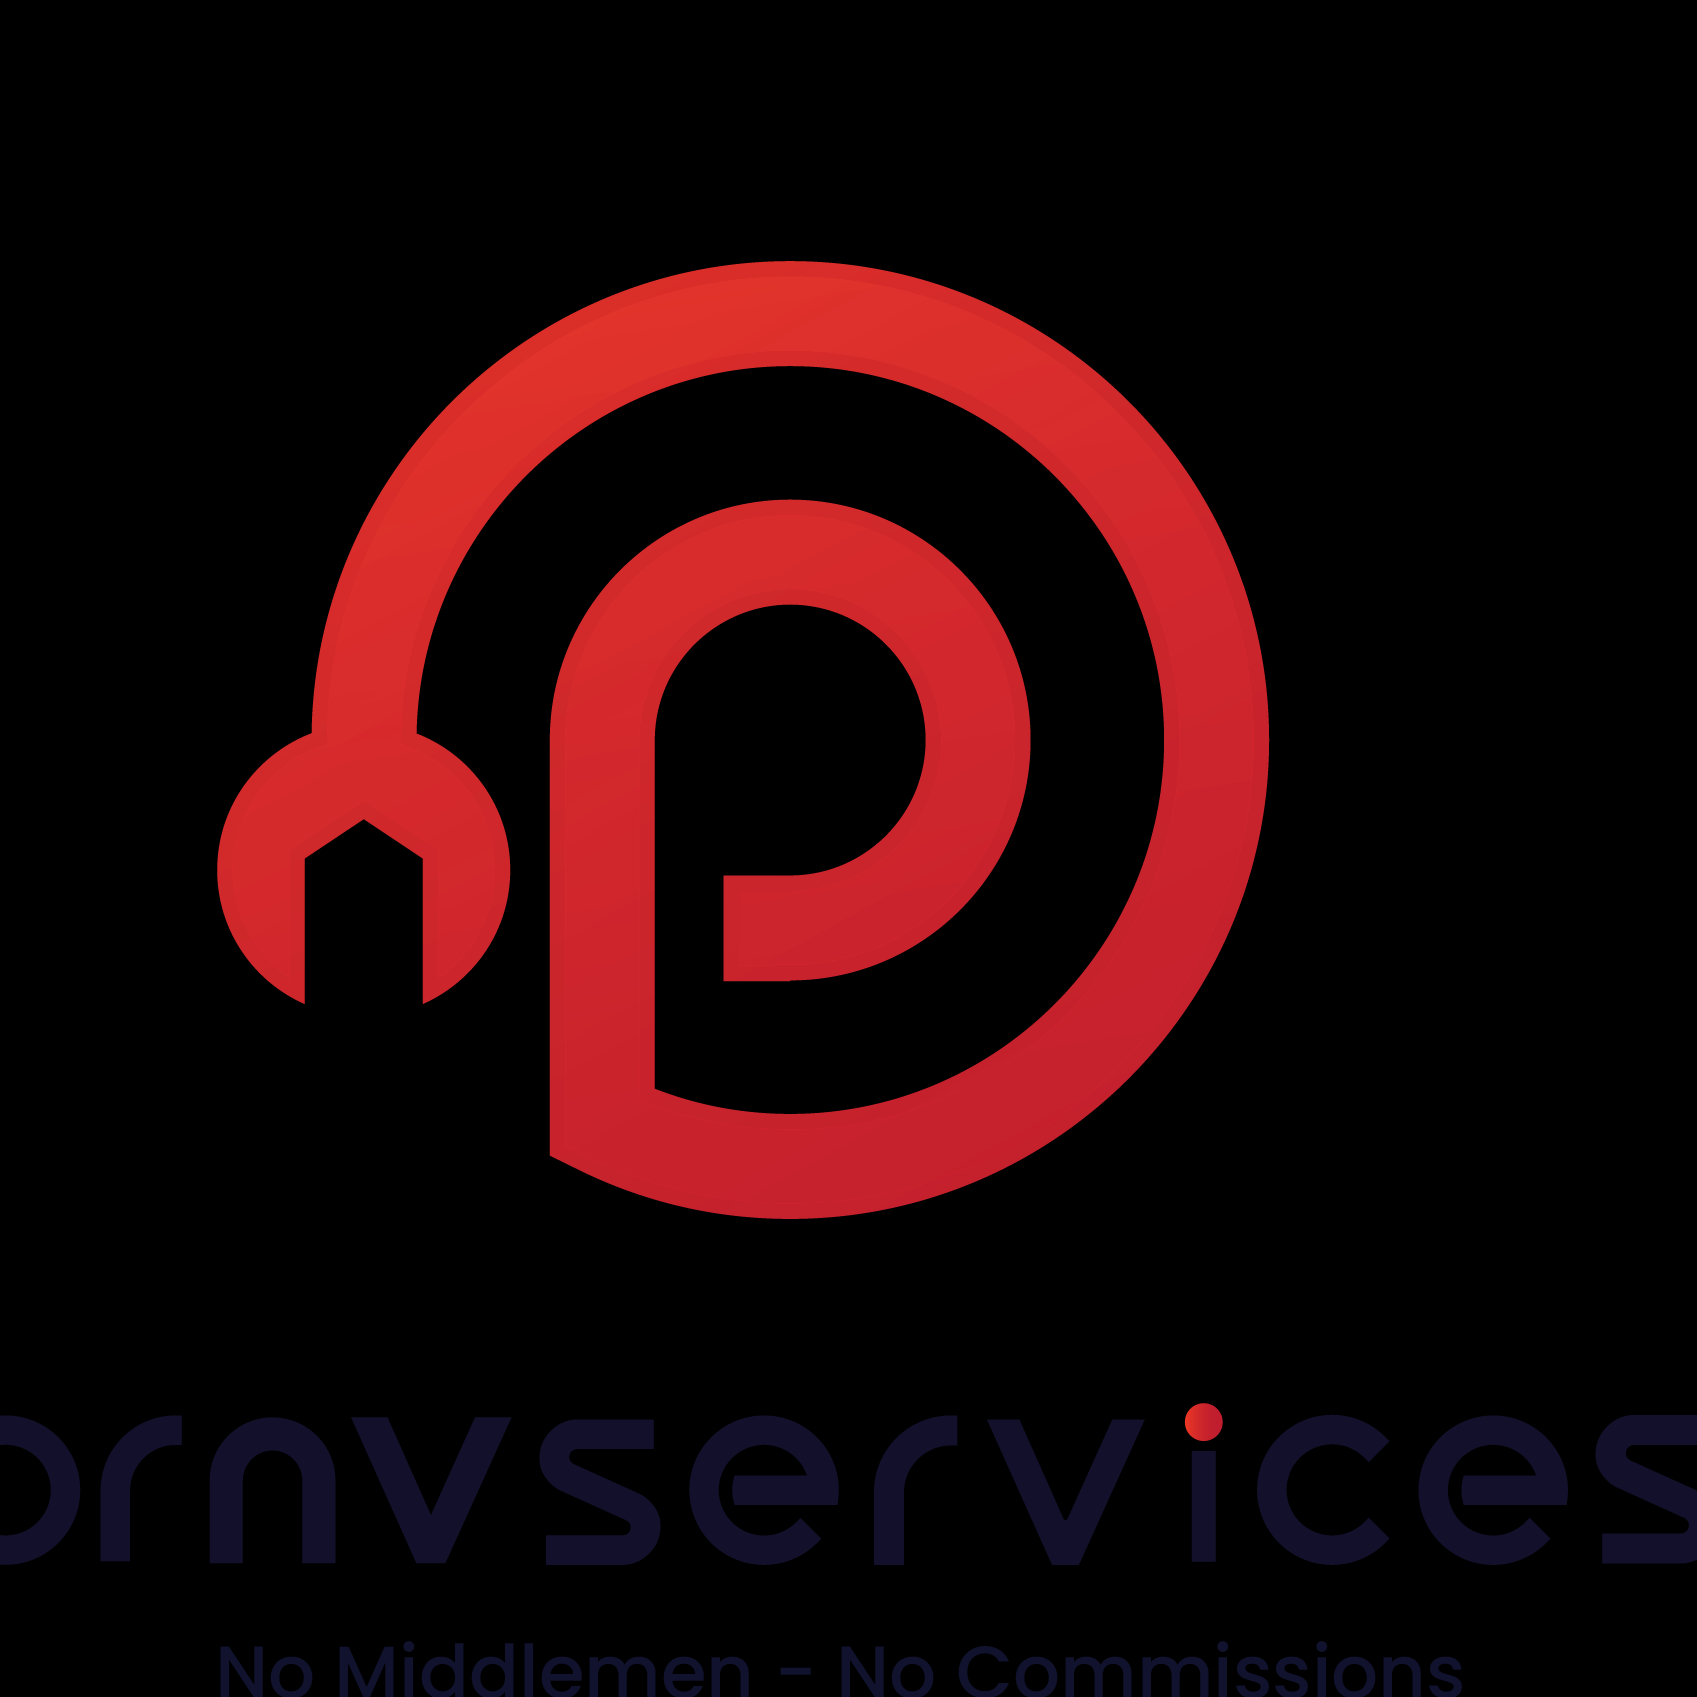 Prnv Services